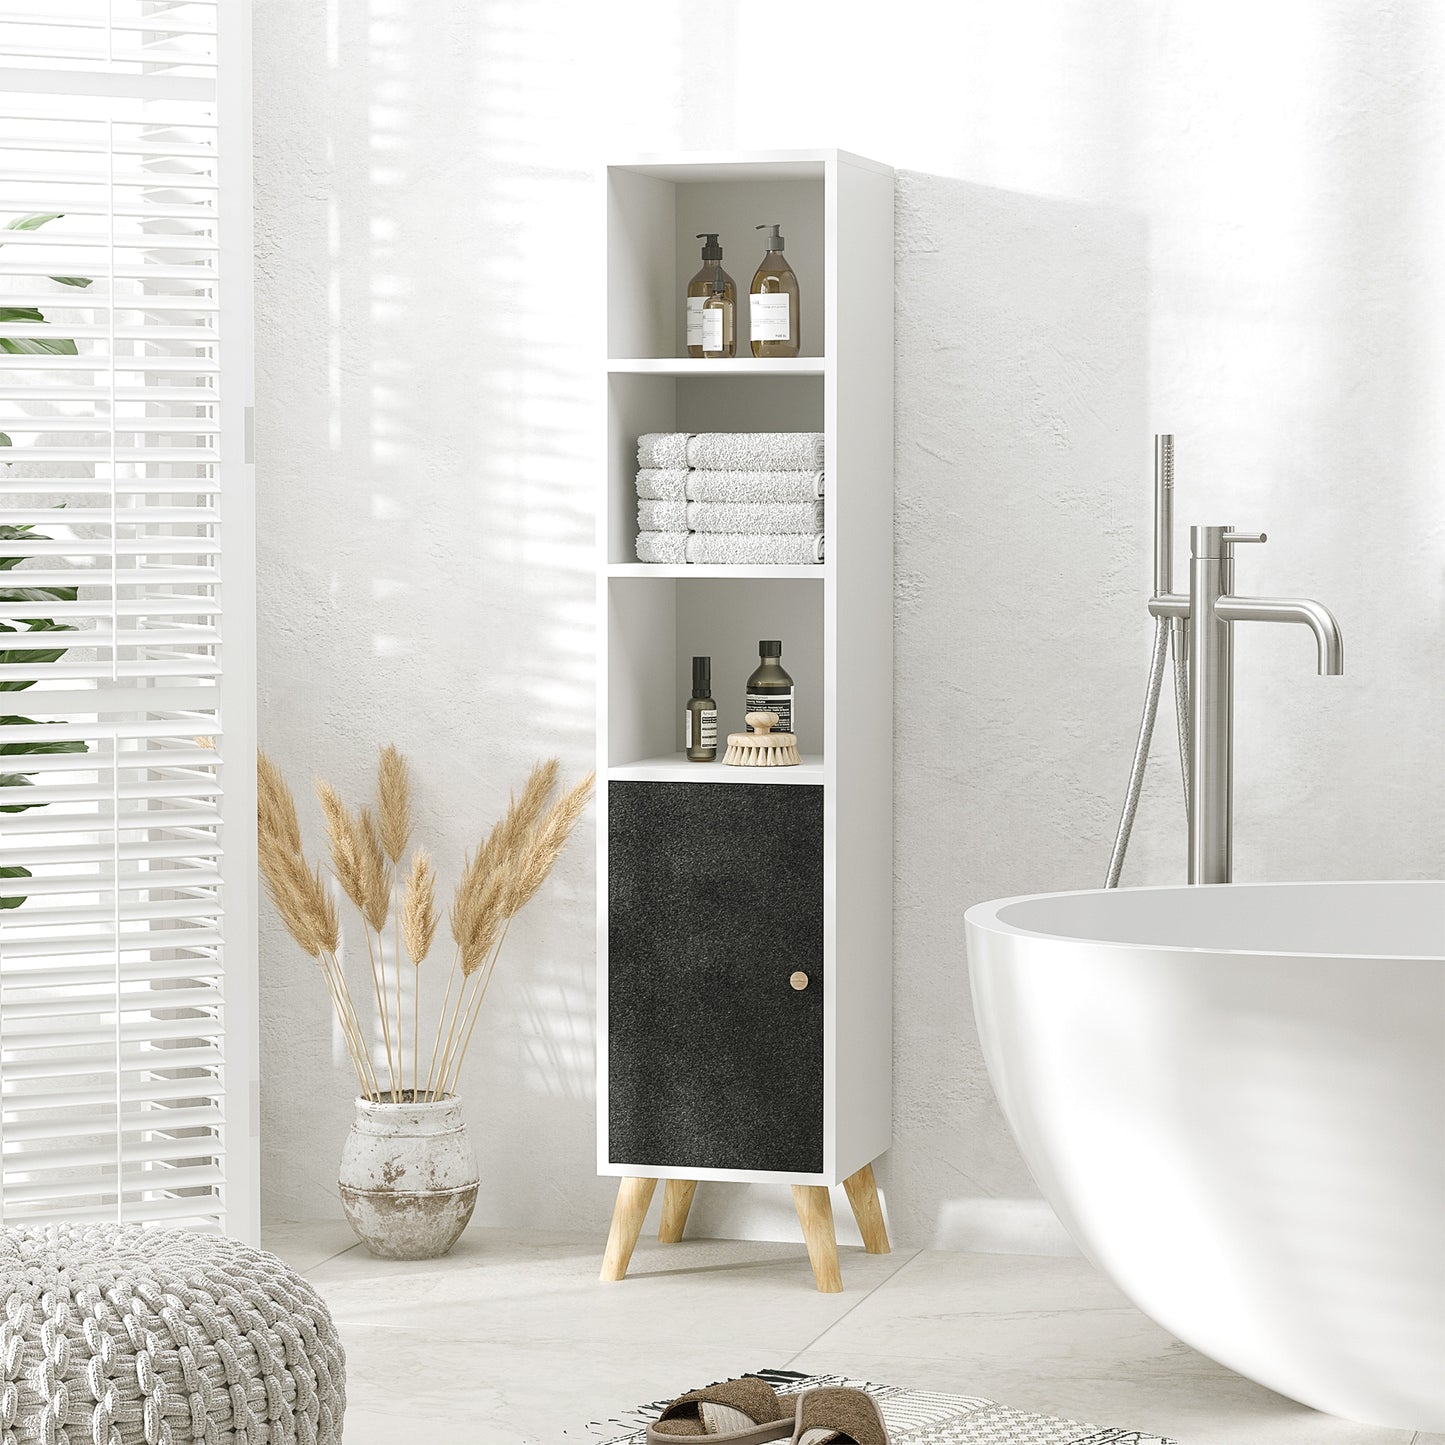 kleankin Bathroom Storage Cabinet, Bathroom Floor Standing Tallboy Unit with Adjustable Shelves and Cabinet, White